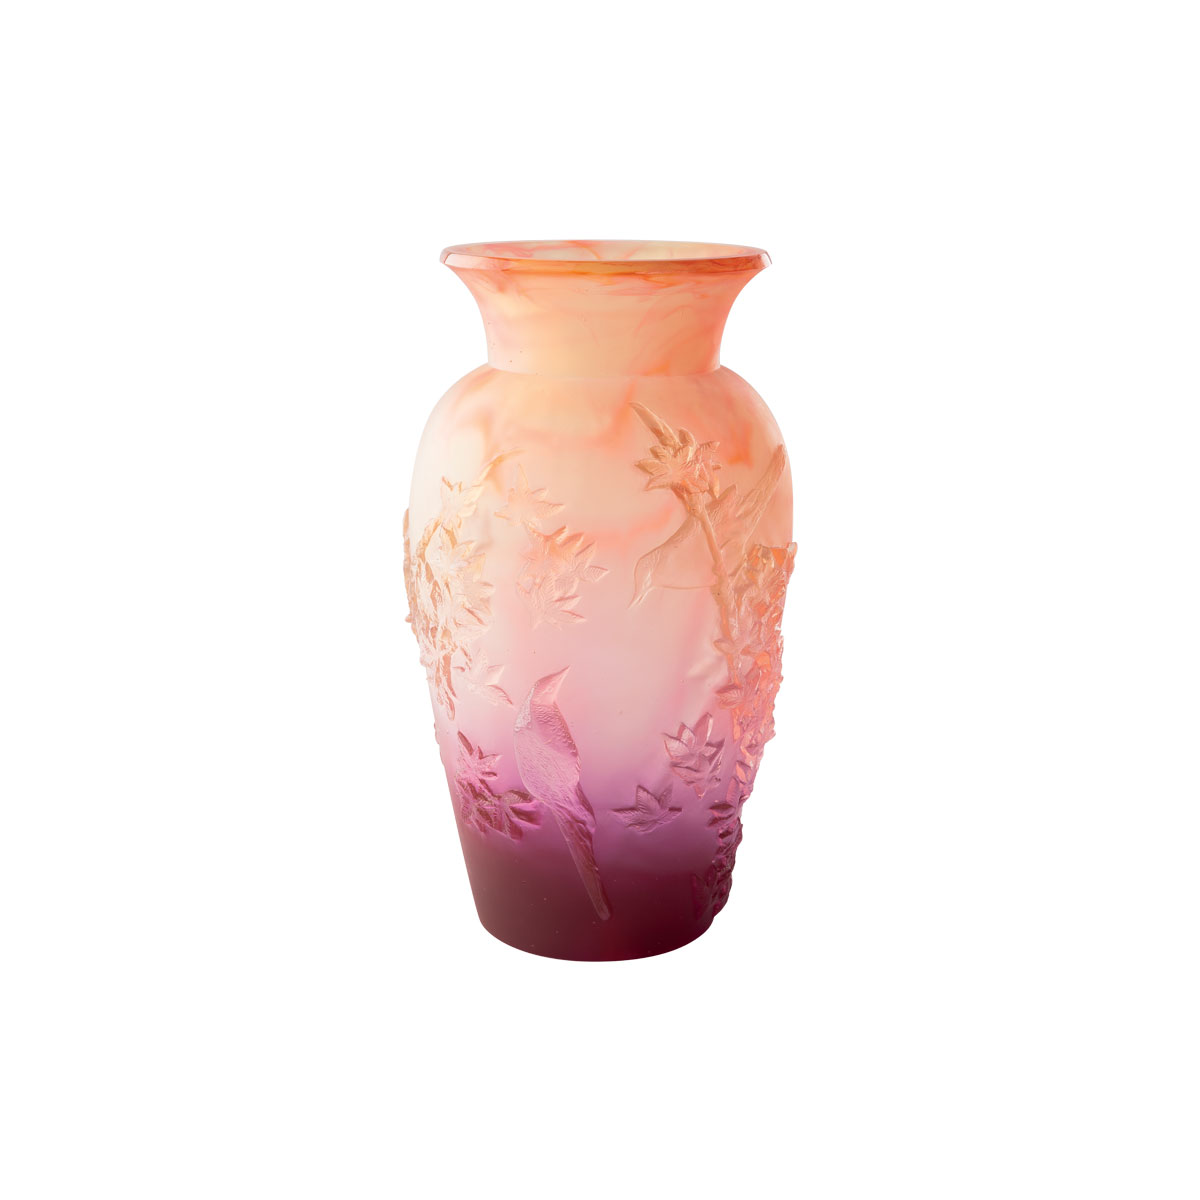 Daum 14.1" Spring Vase by Shogo Kariyazaki, Limited Edition